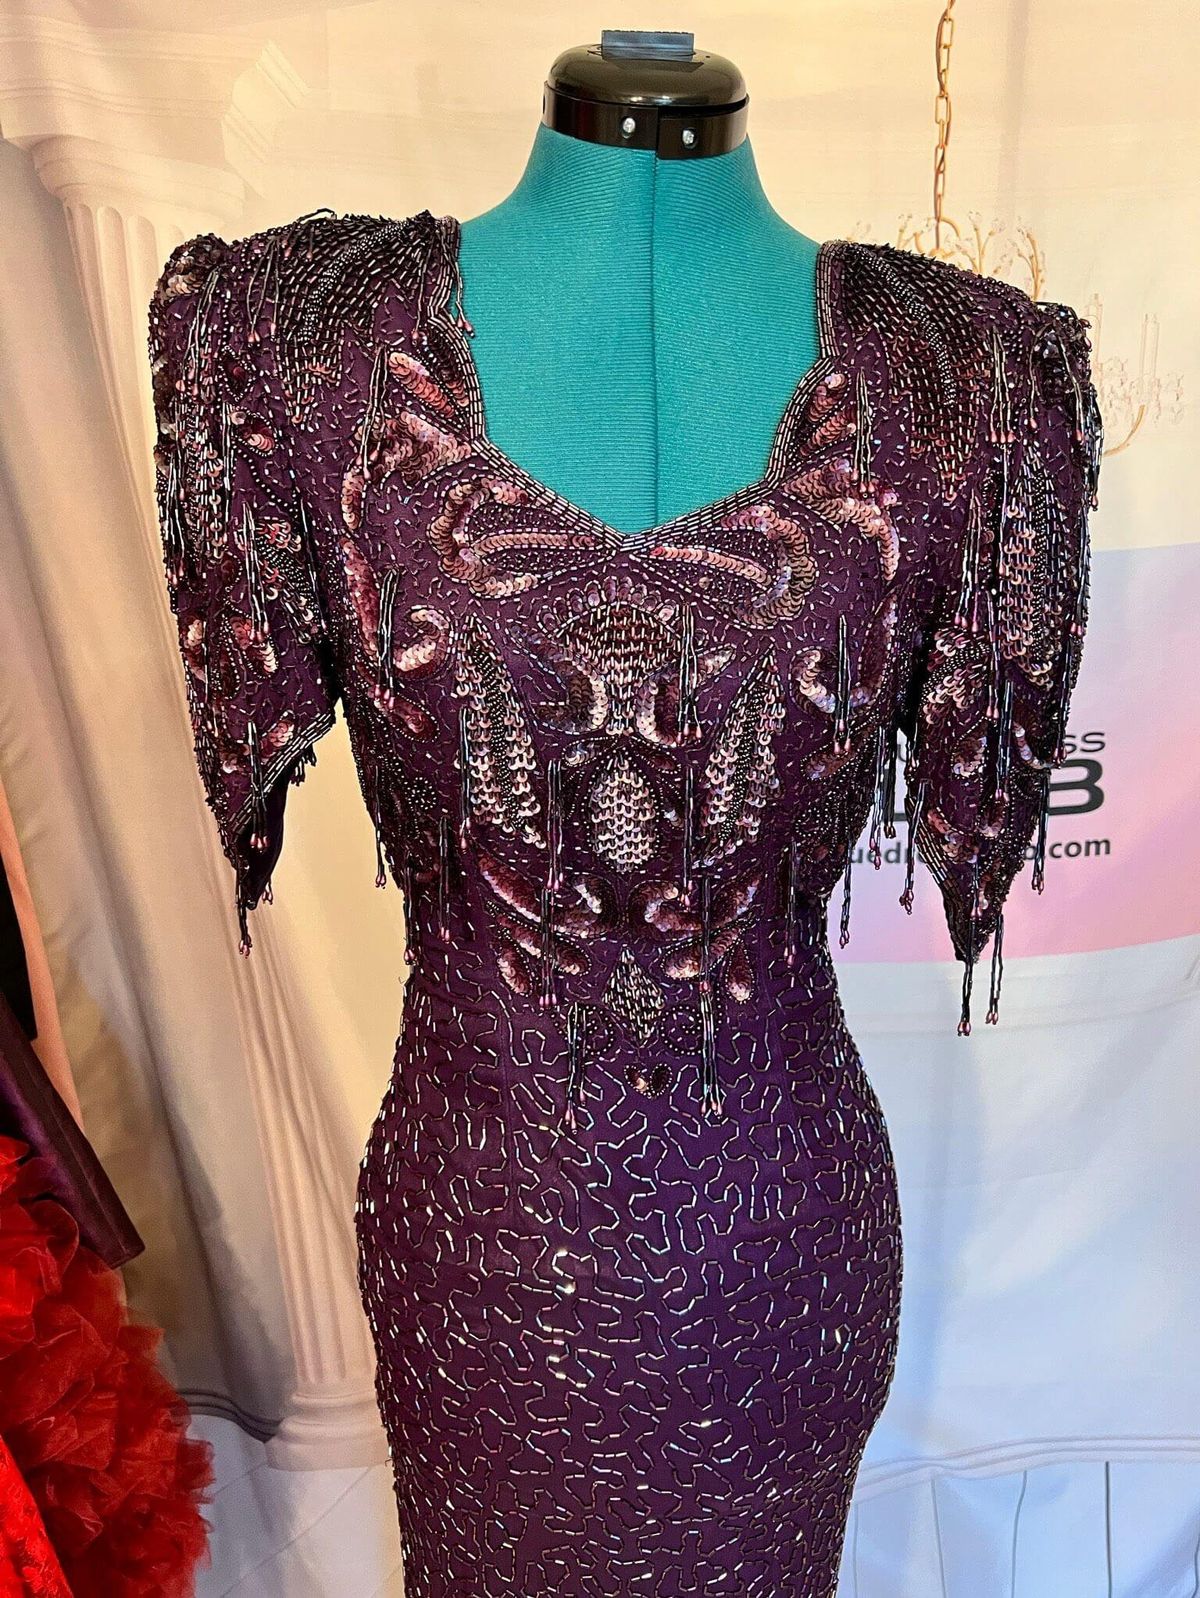 Unique Dress Club Size 2 Satin Purple Mermaid Dress on Queenly